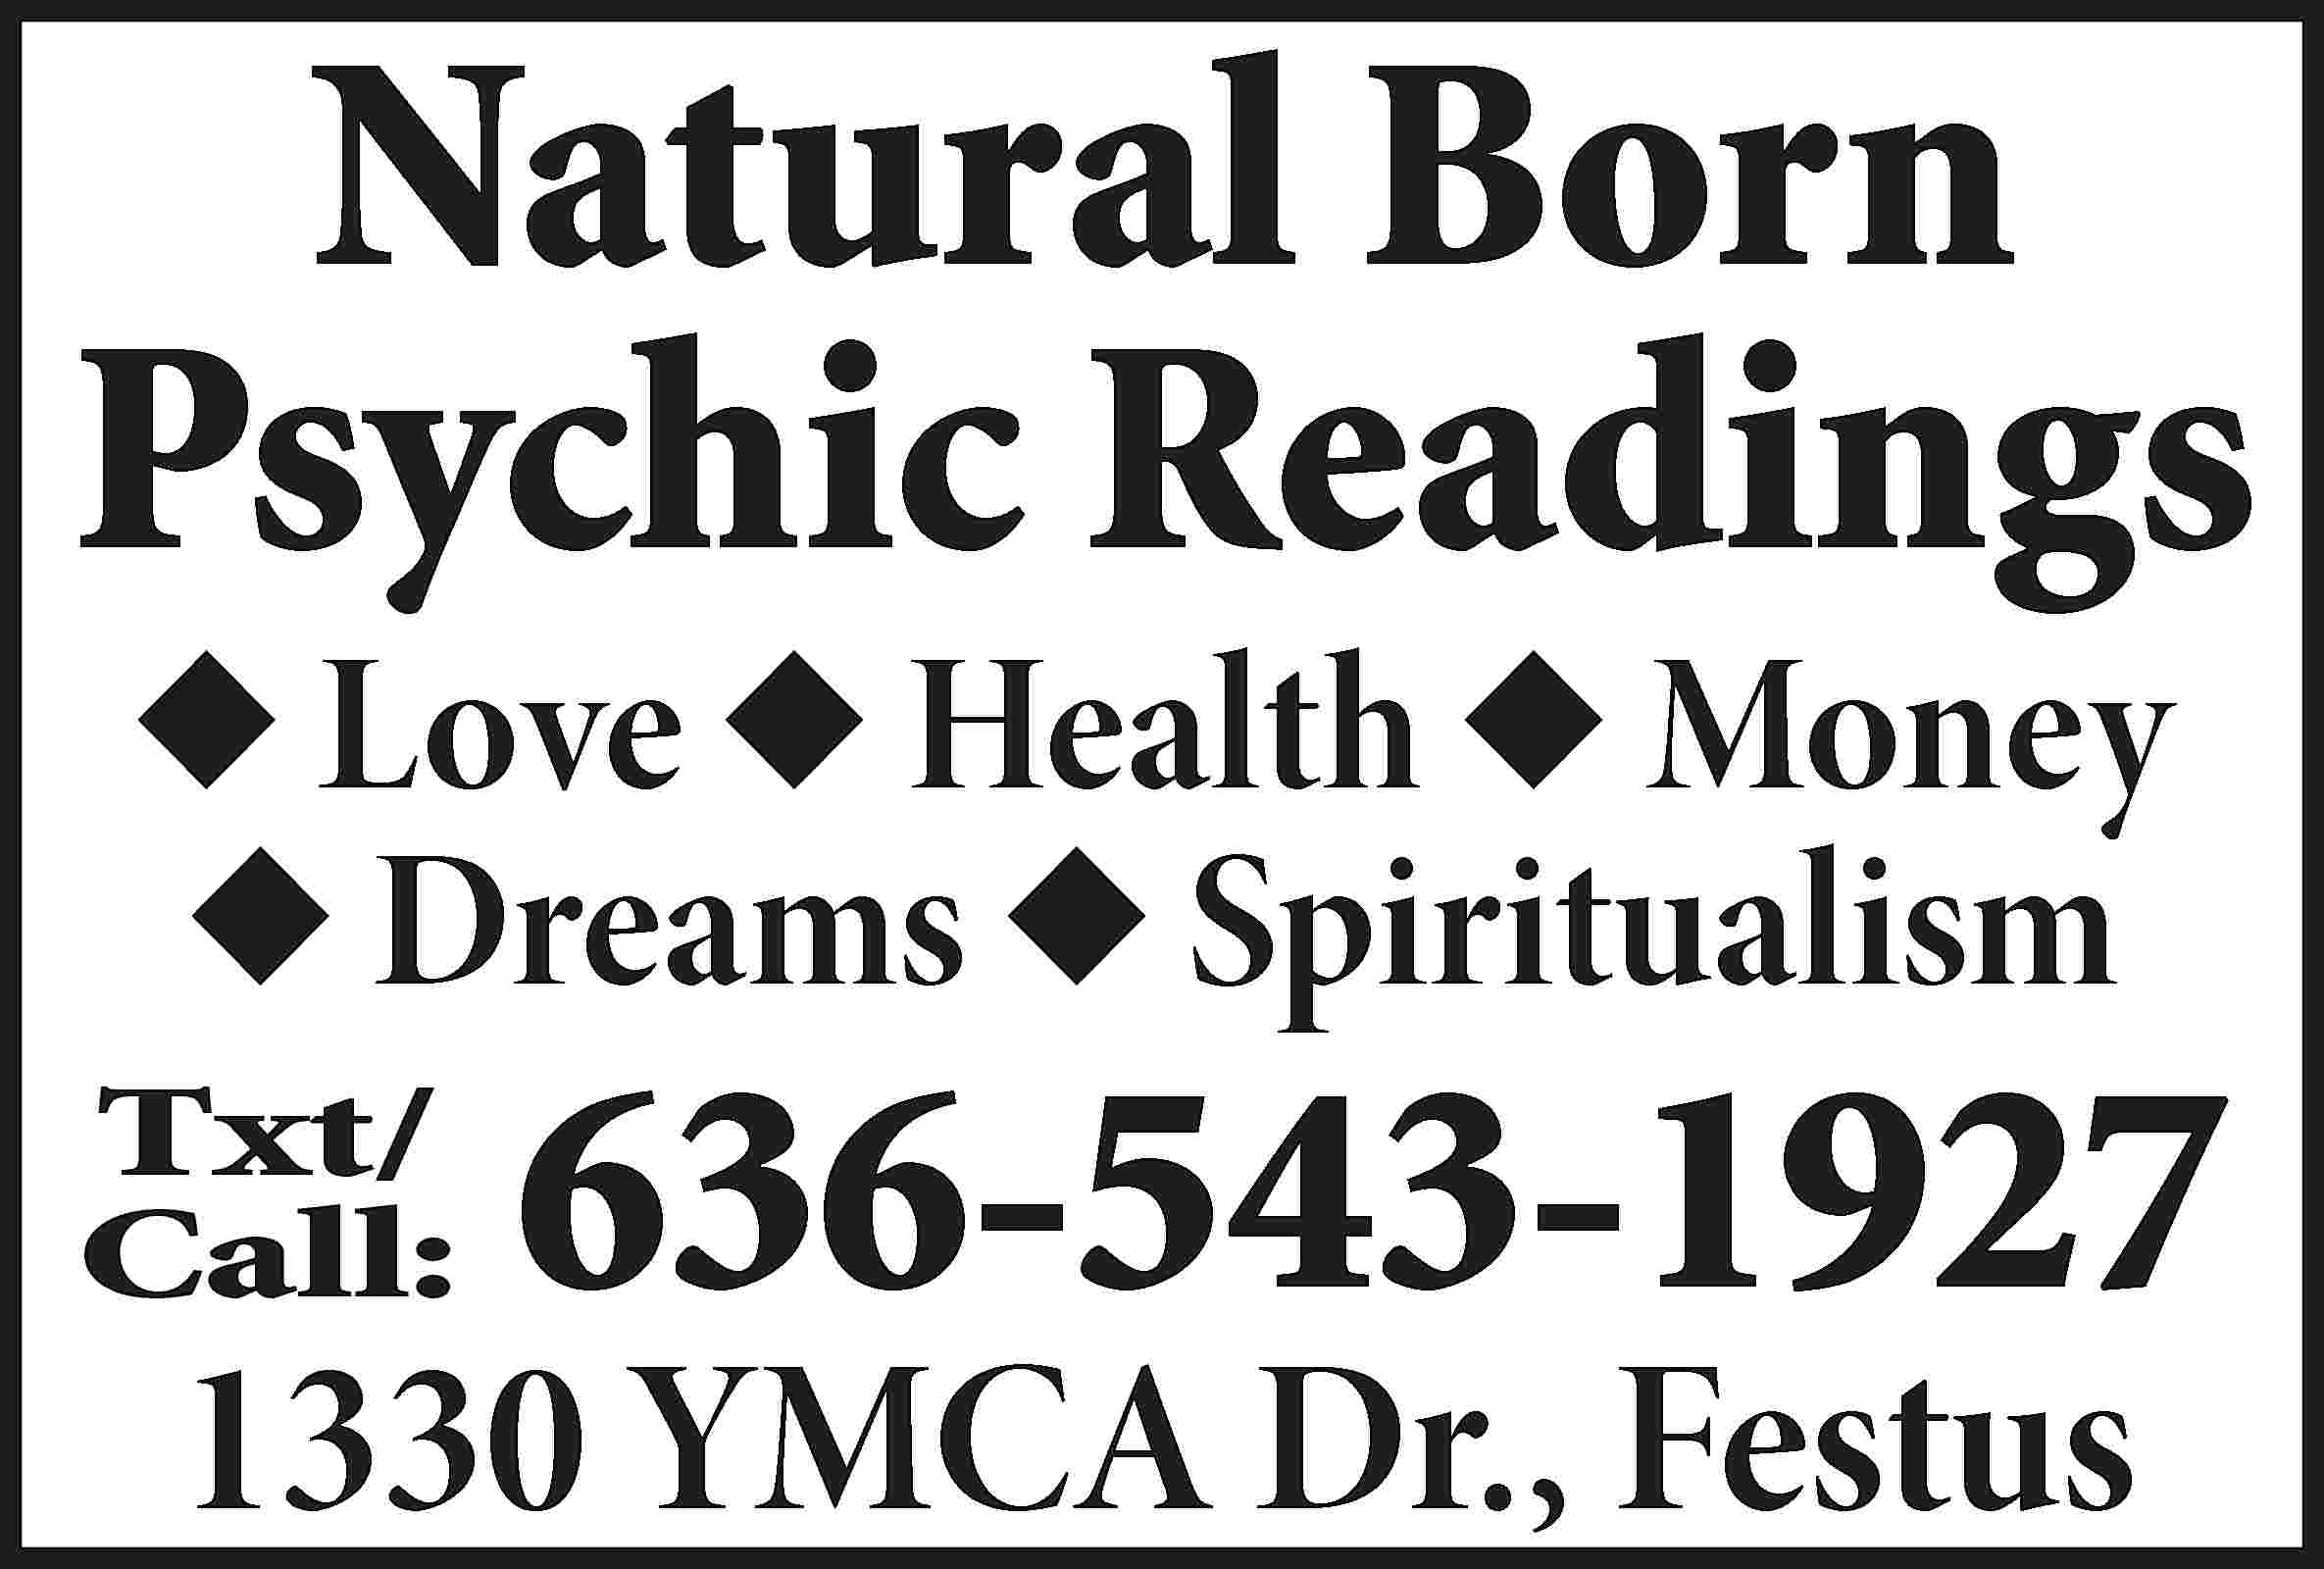 Natural Born Psychic Readings u  Natural Born Psychic Readings u Love u Health u Money u Dreams u Spiritualism Txt/ Call: 636-543-1927 1330 YMCA Dr., Festus